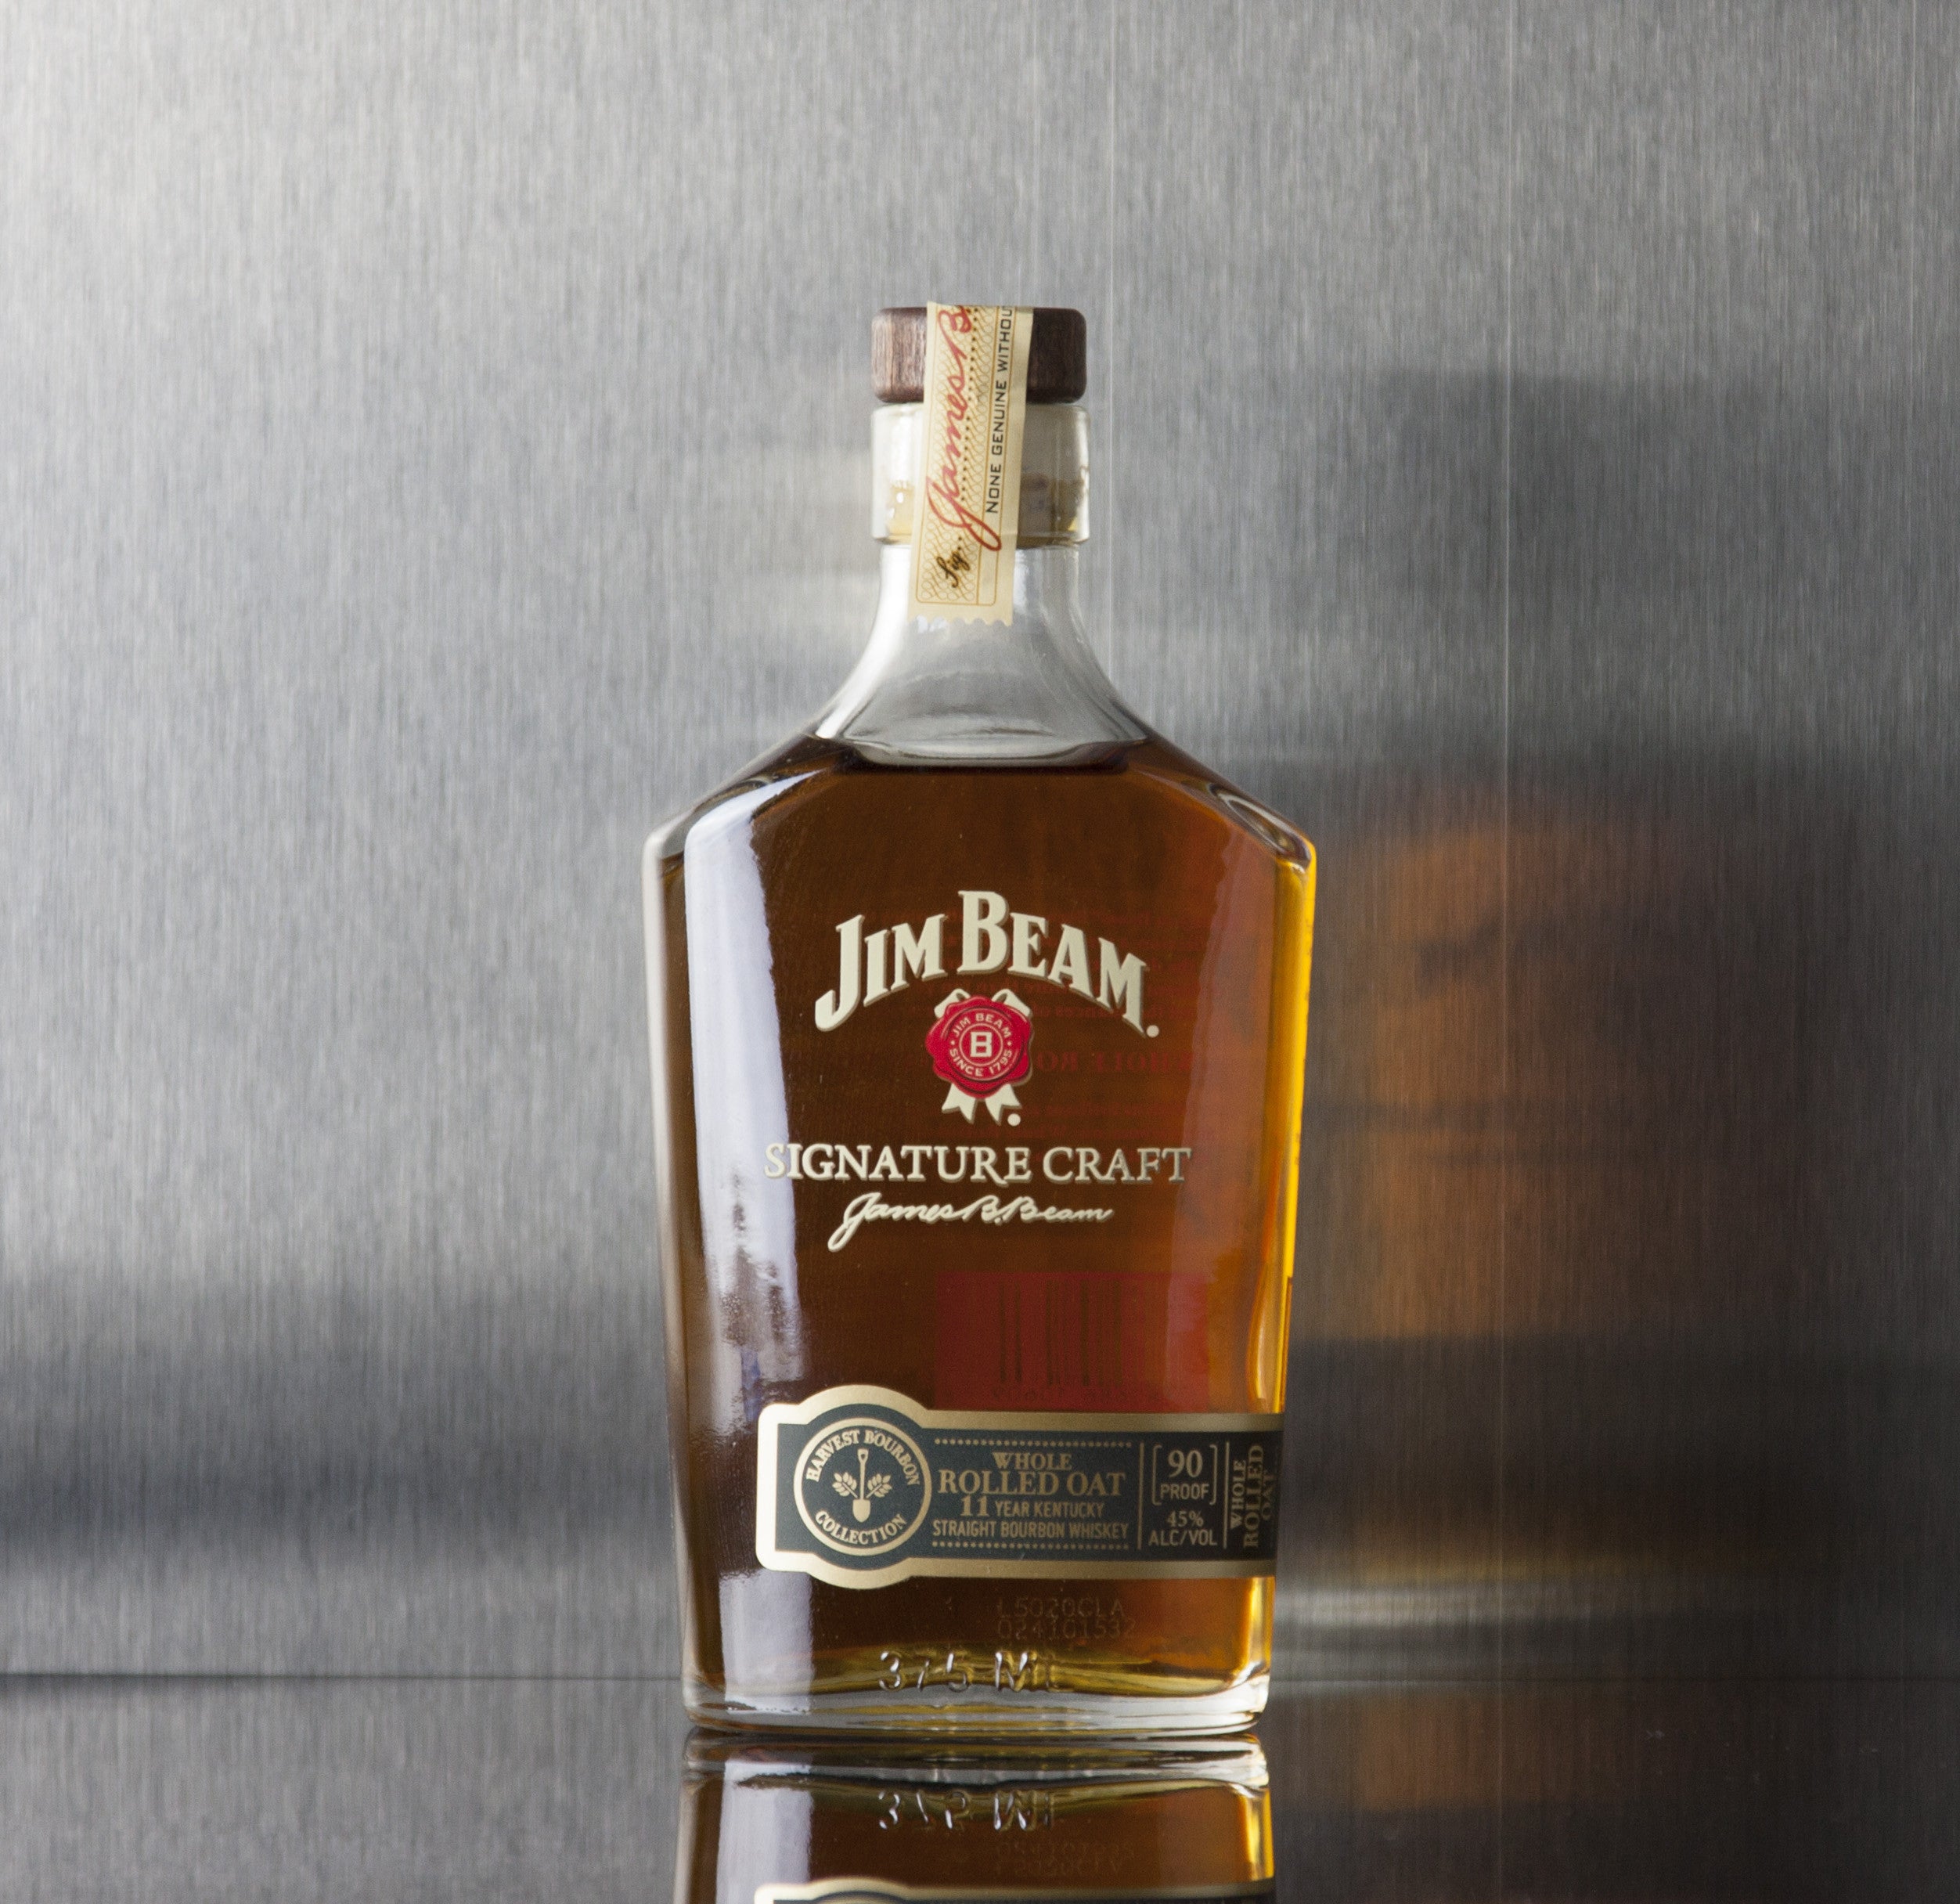 Jim Beam Signature Craft 11 Year Whole Rolled Oat Bourbon 375 ml